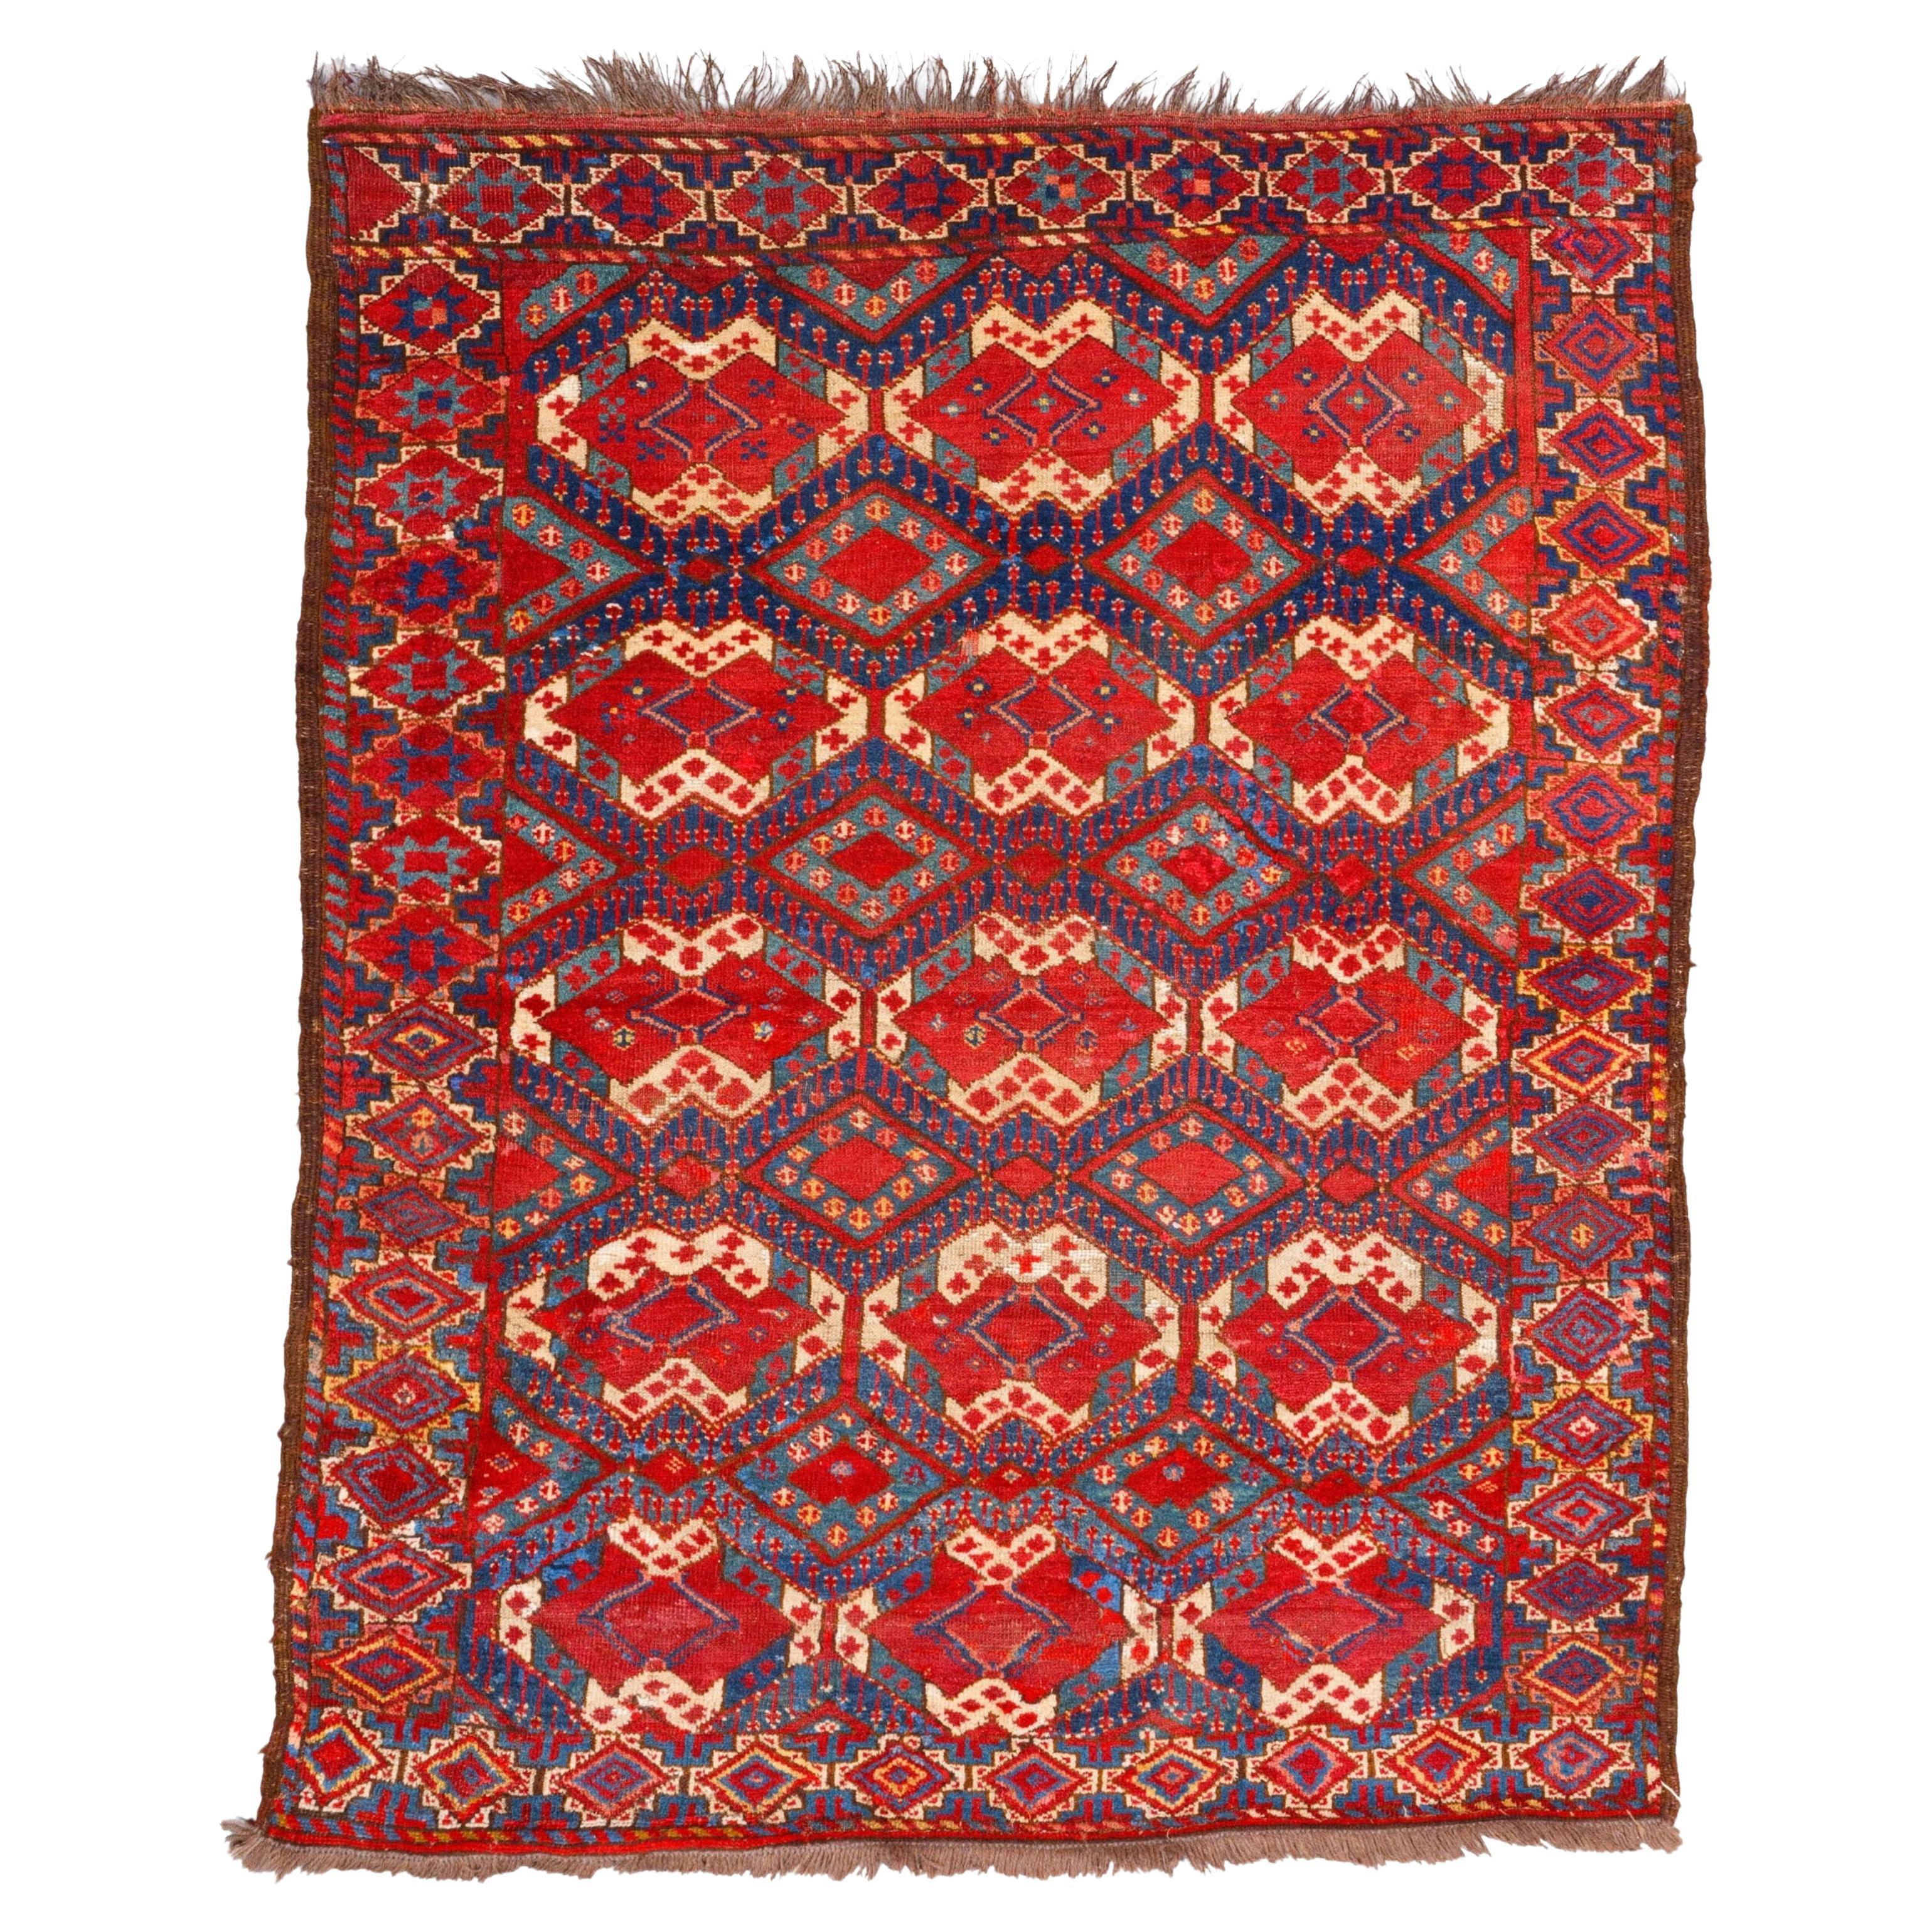 Antique Beshir Carpet - 19th Century Antique Beshir Engsi, Antique Rug For Sale